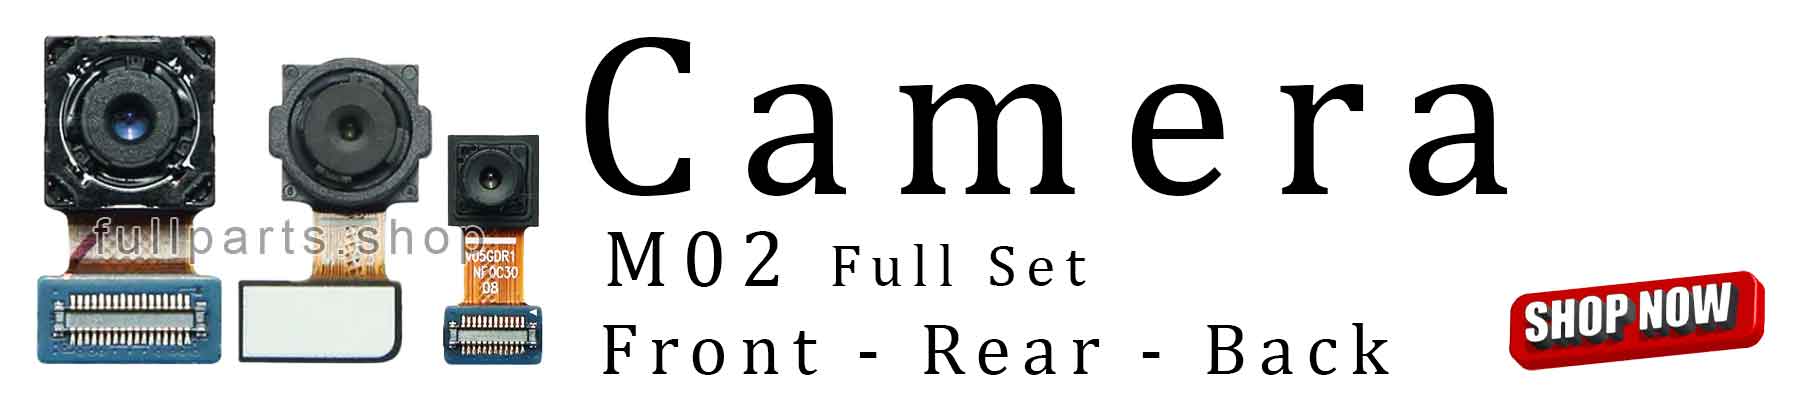 M02-Camara-full-set